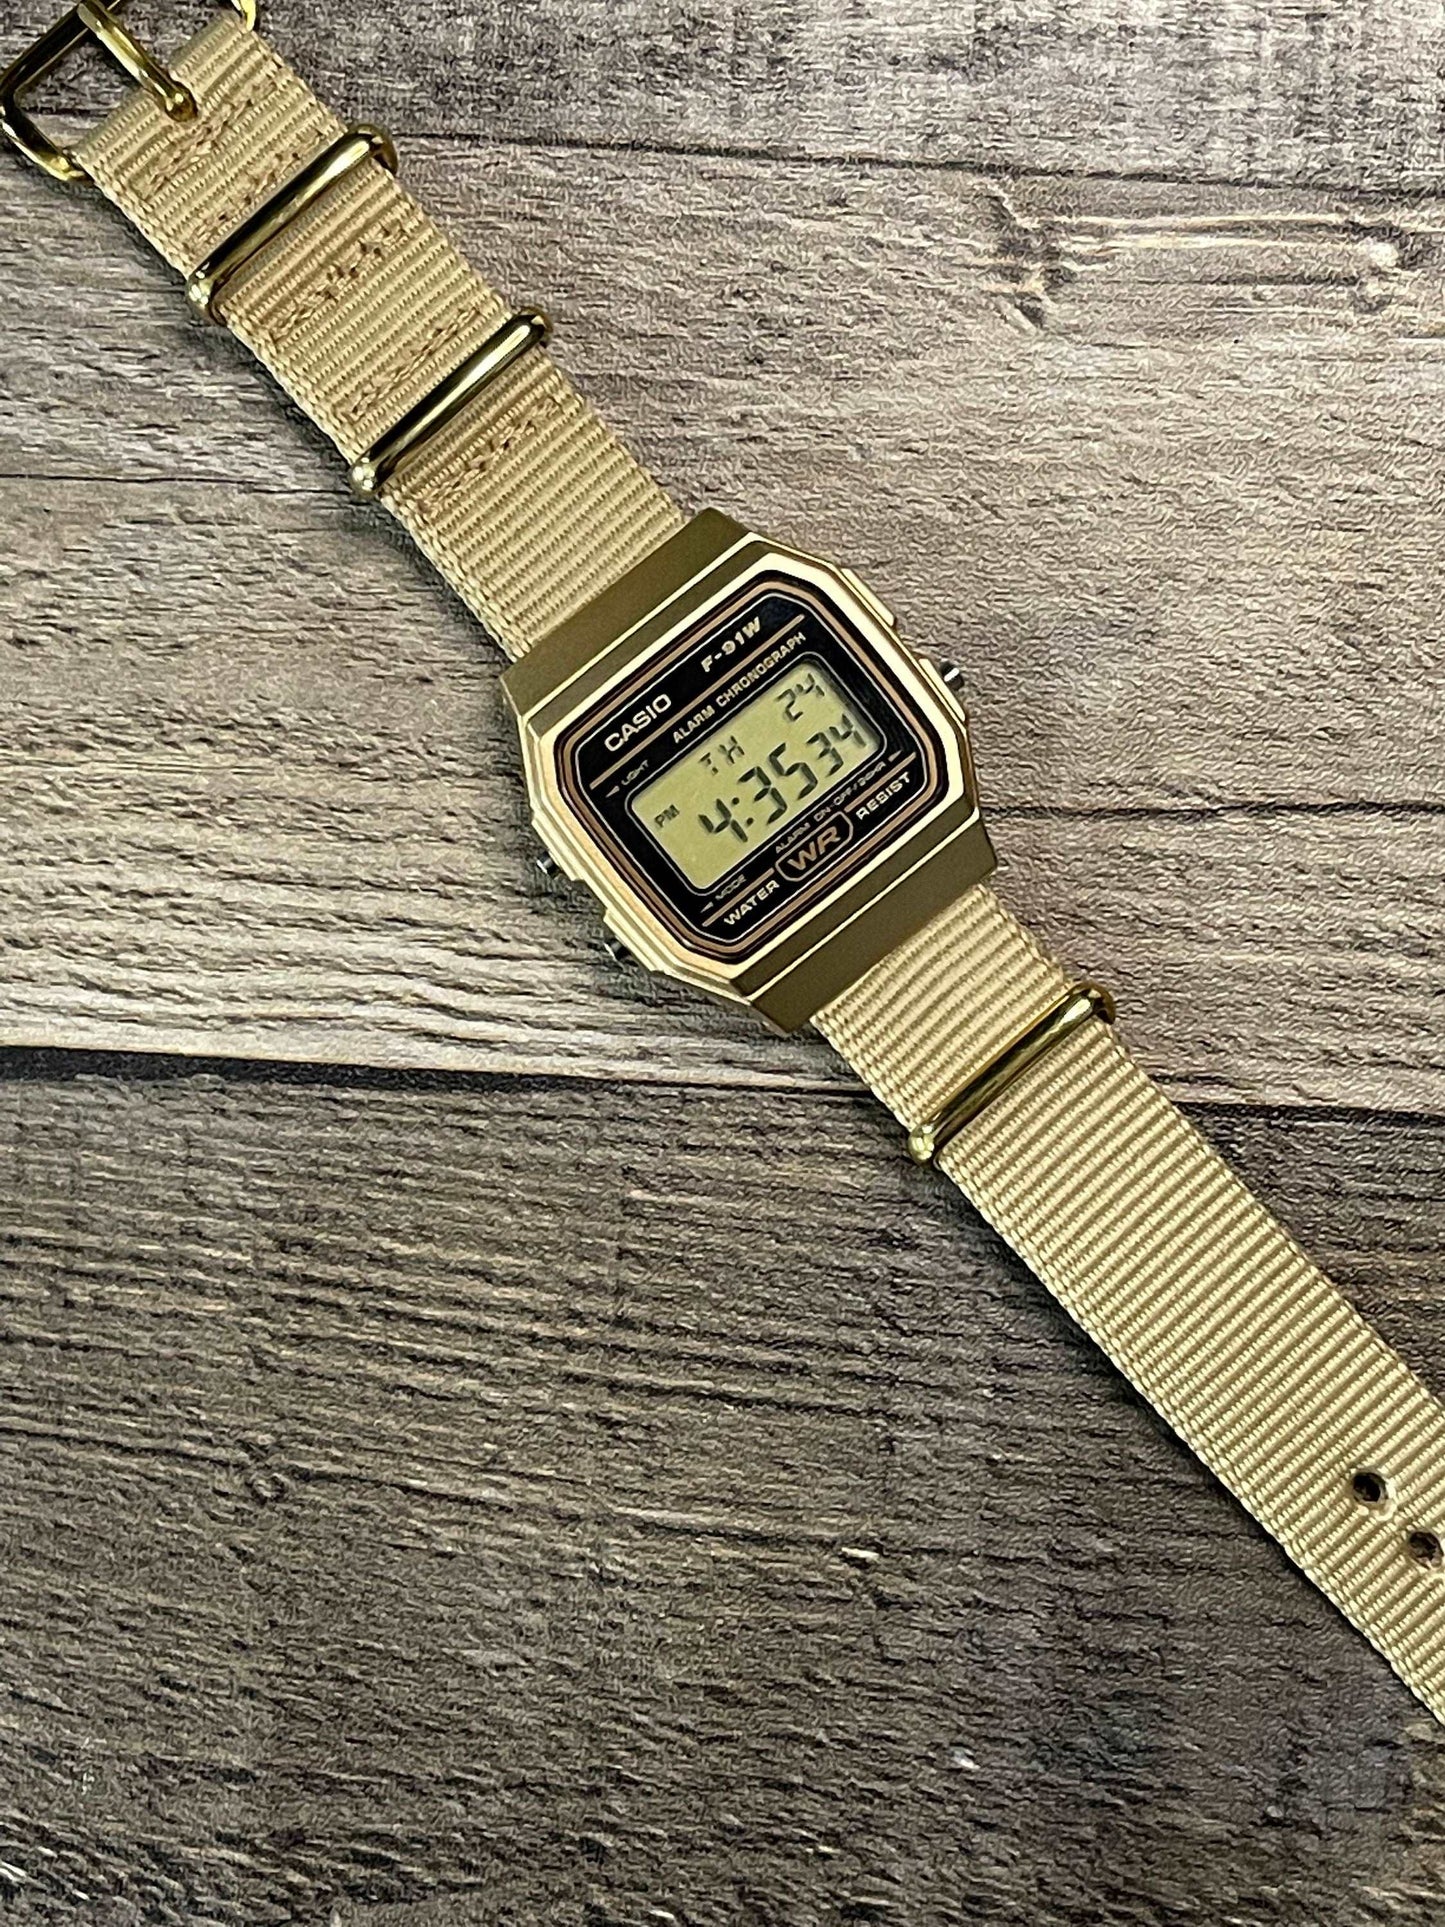 Custom Gold Casio Watch on Gold Strap